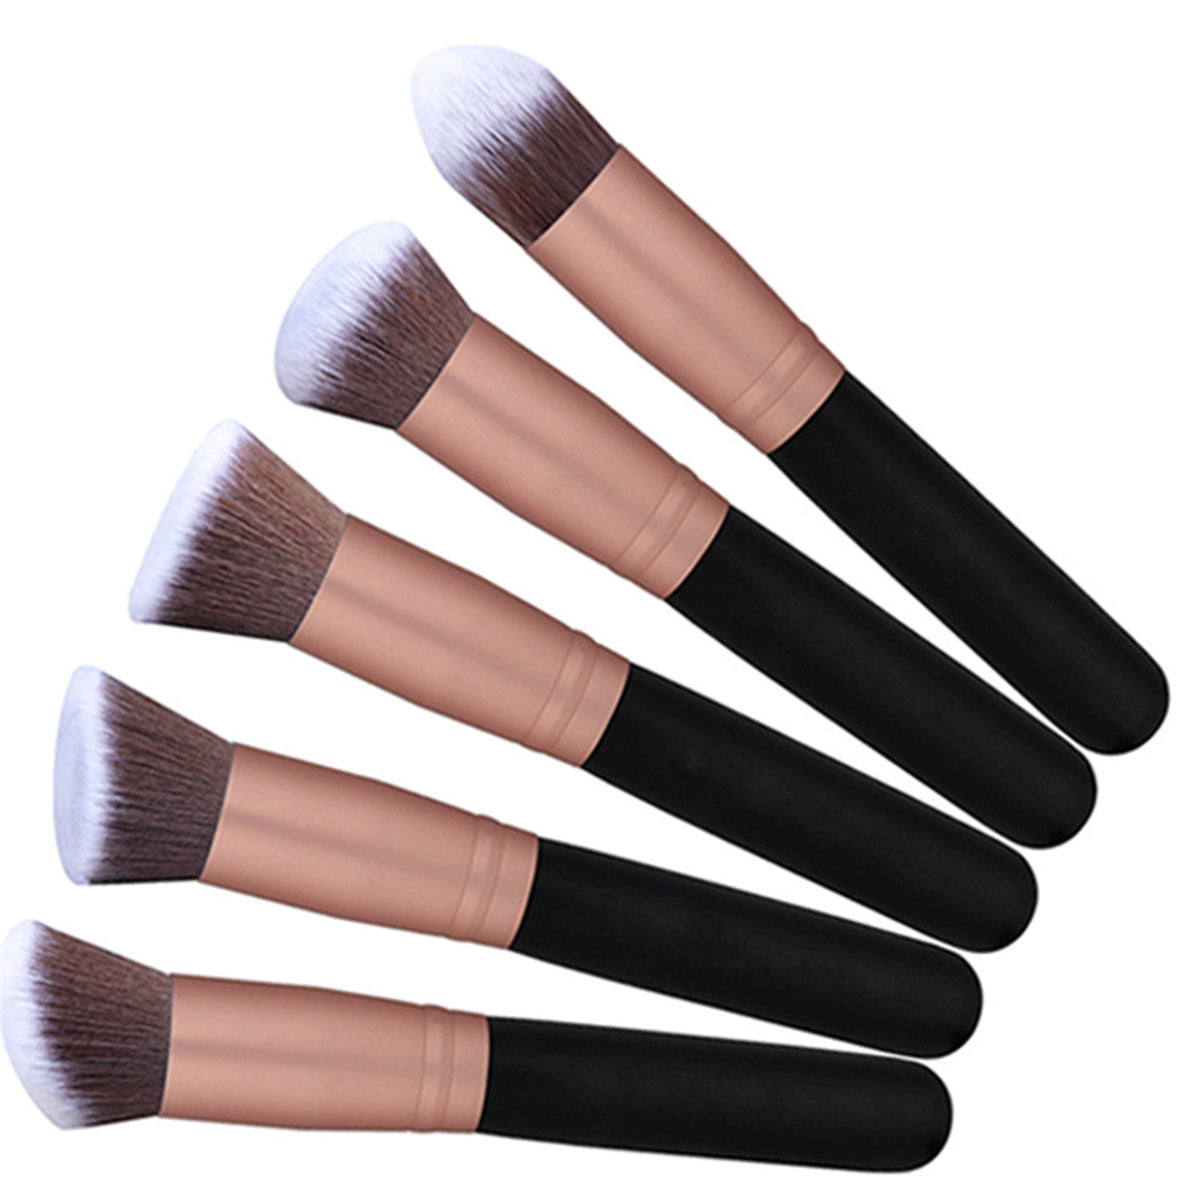 Makeup Brushes 16pcs Makeup Brushes Set Premium Synthetic Foundation Brushes Blending Face Powder Eye Shadow Concealer Make Up Brushes Tool Kit